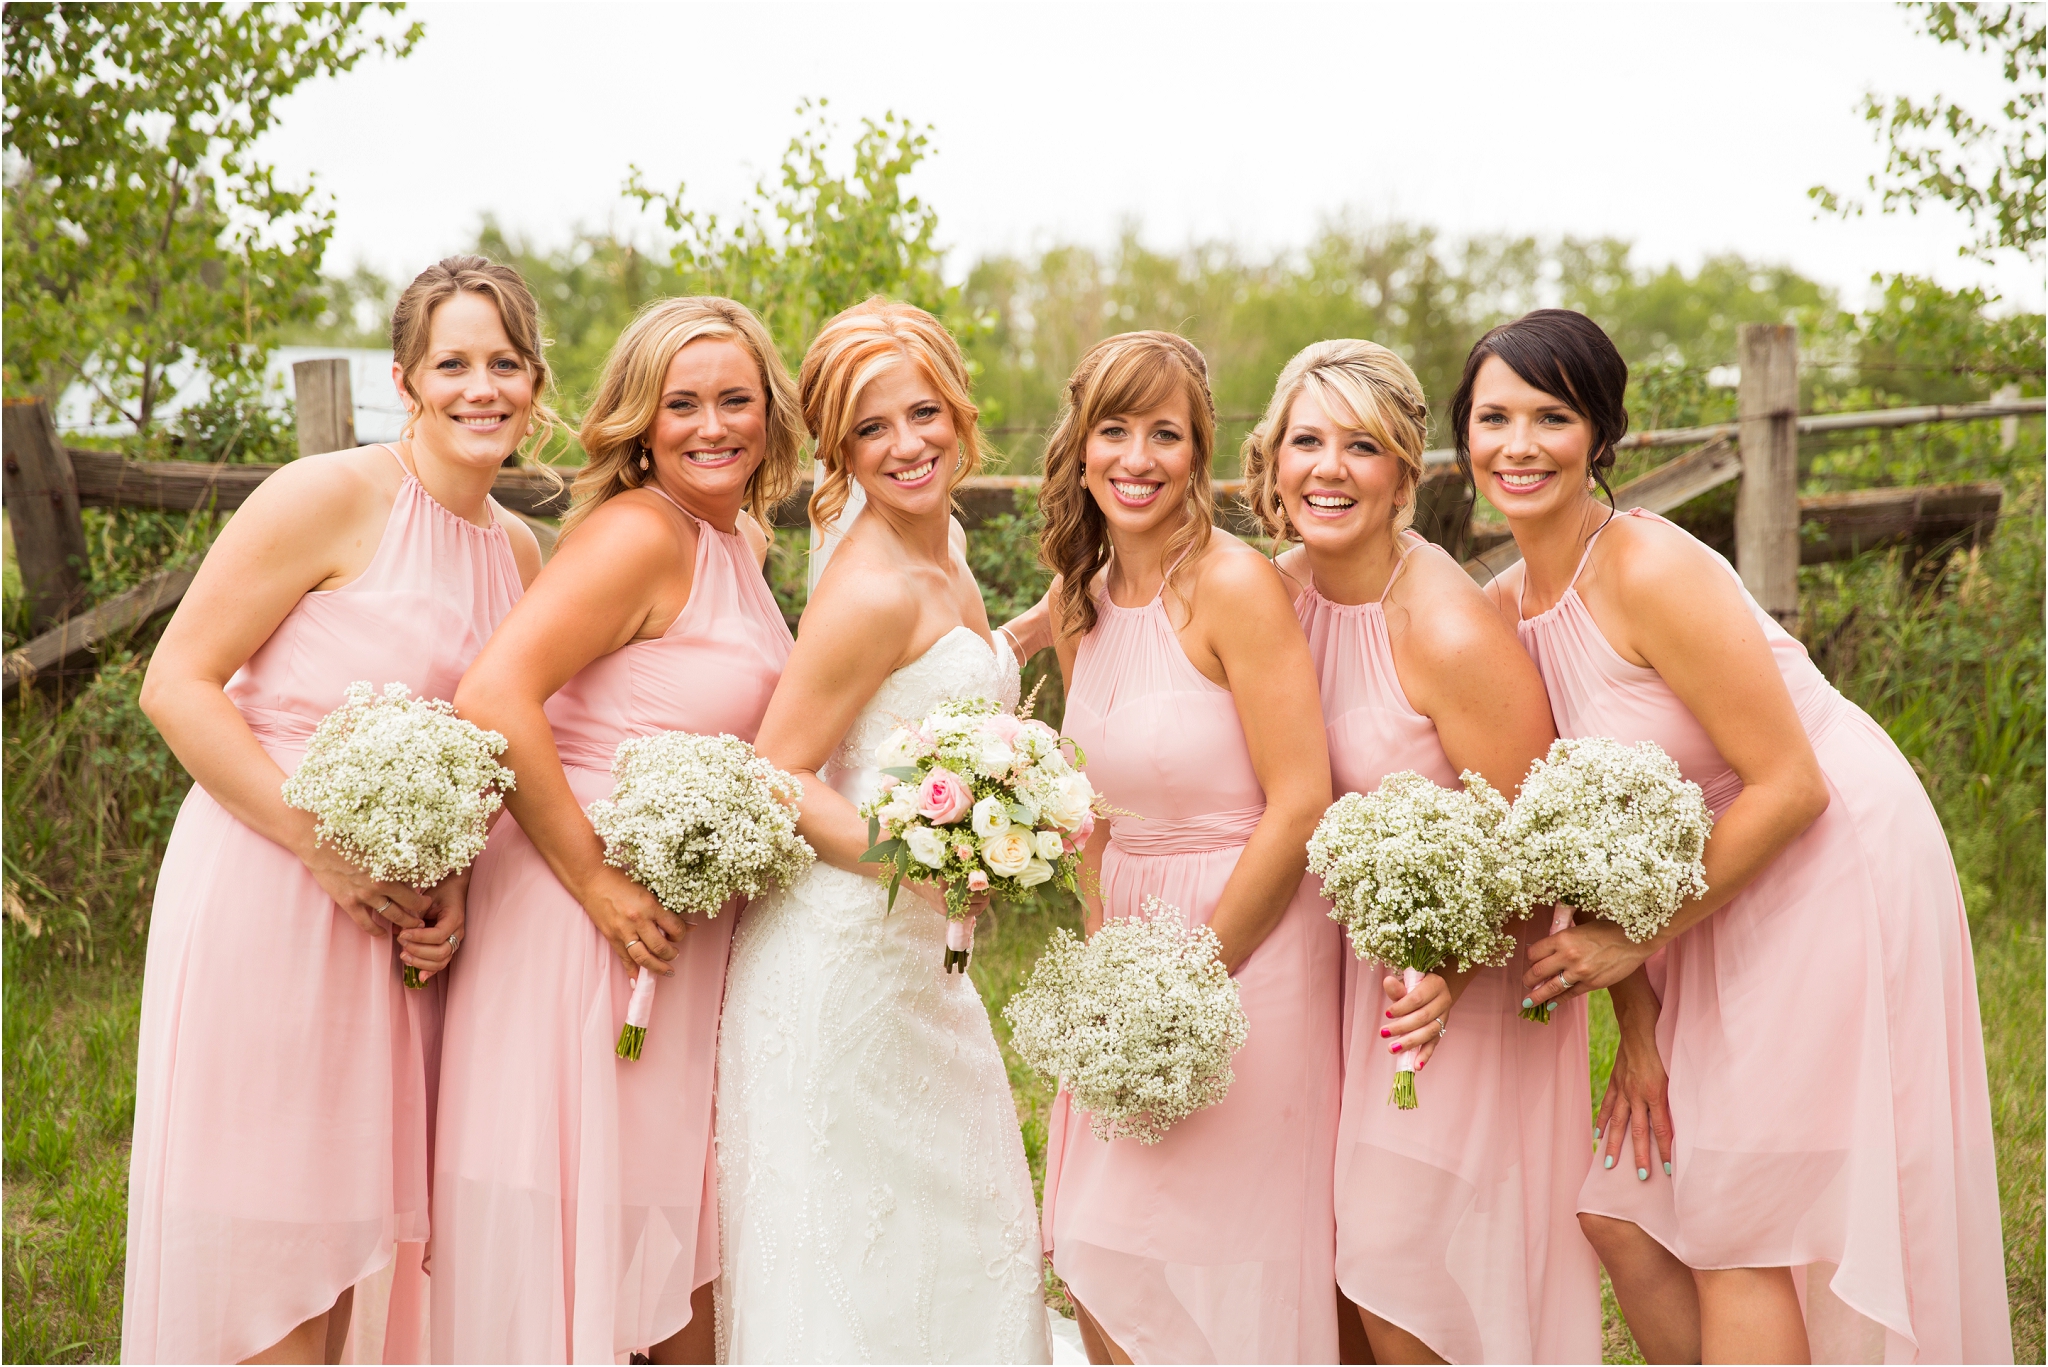 blush bridesmaids dresses edmonton wedding photographer